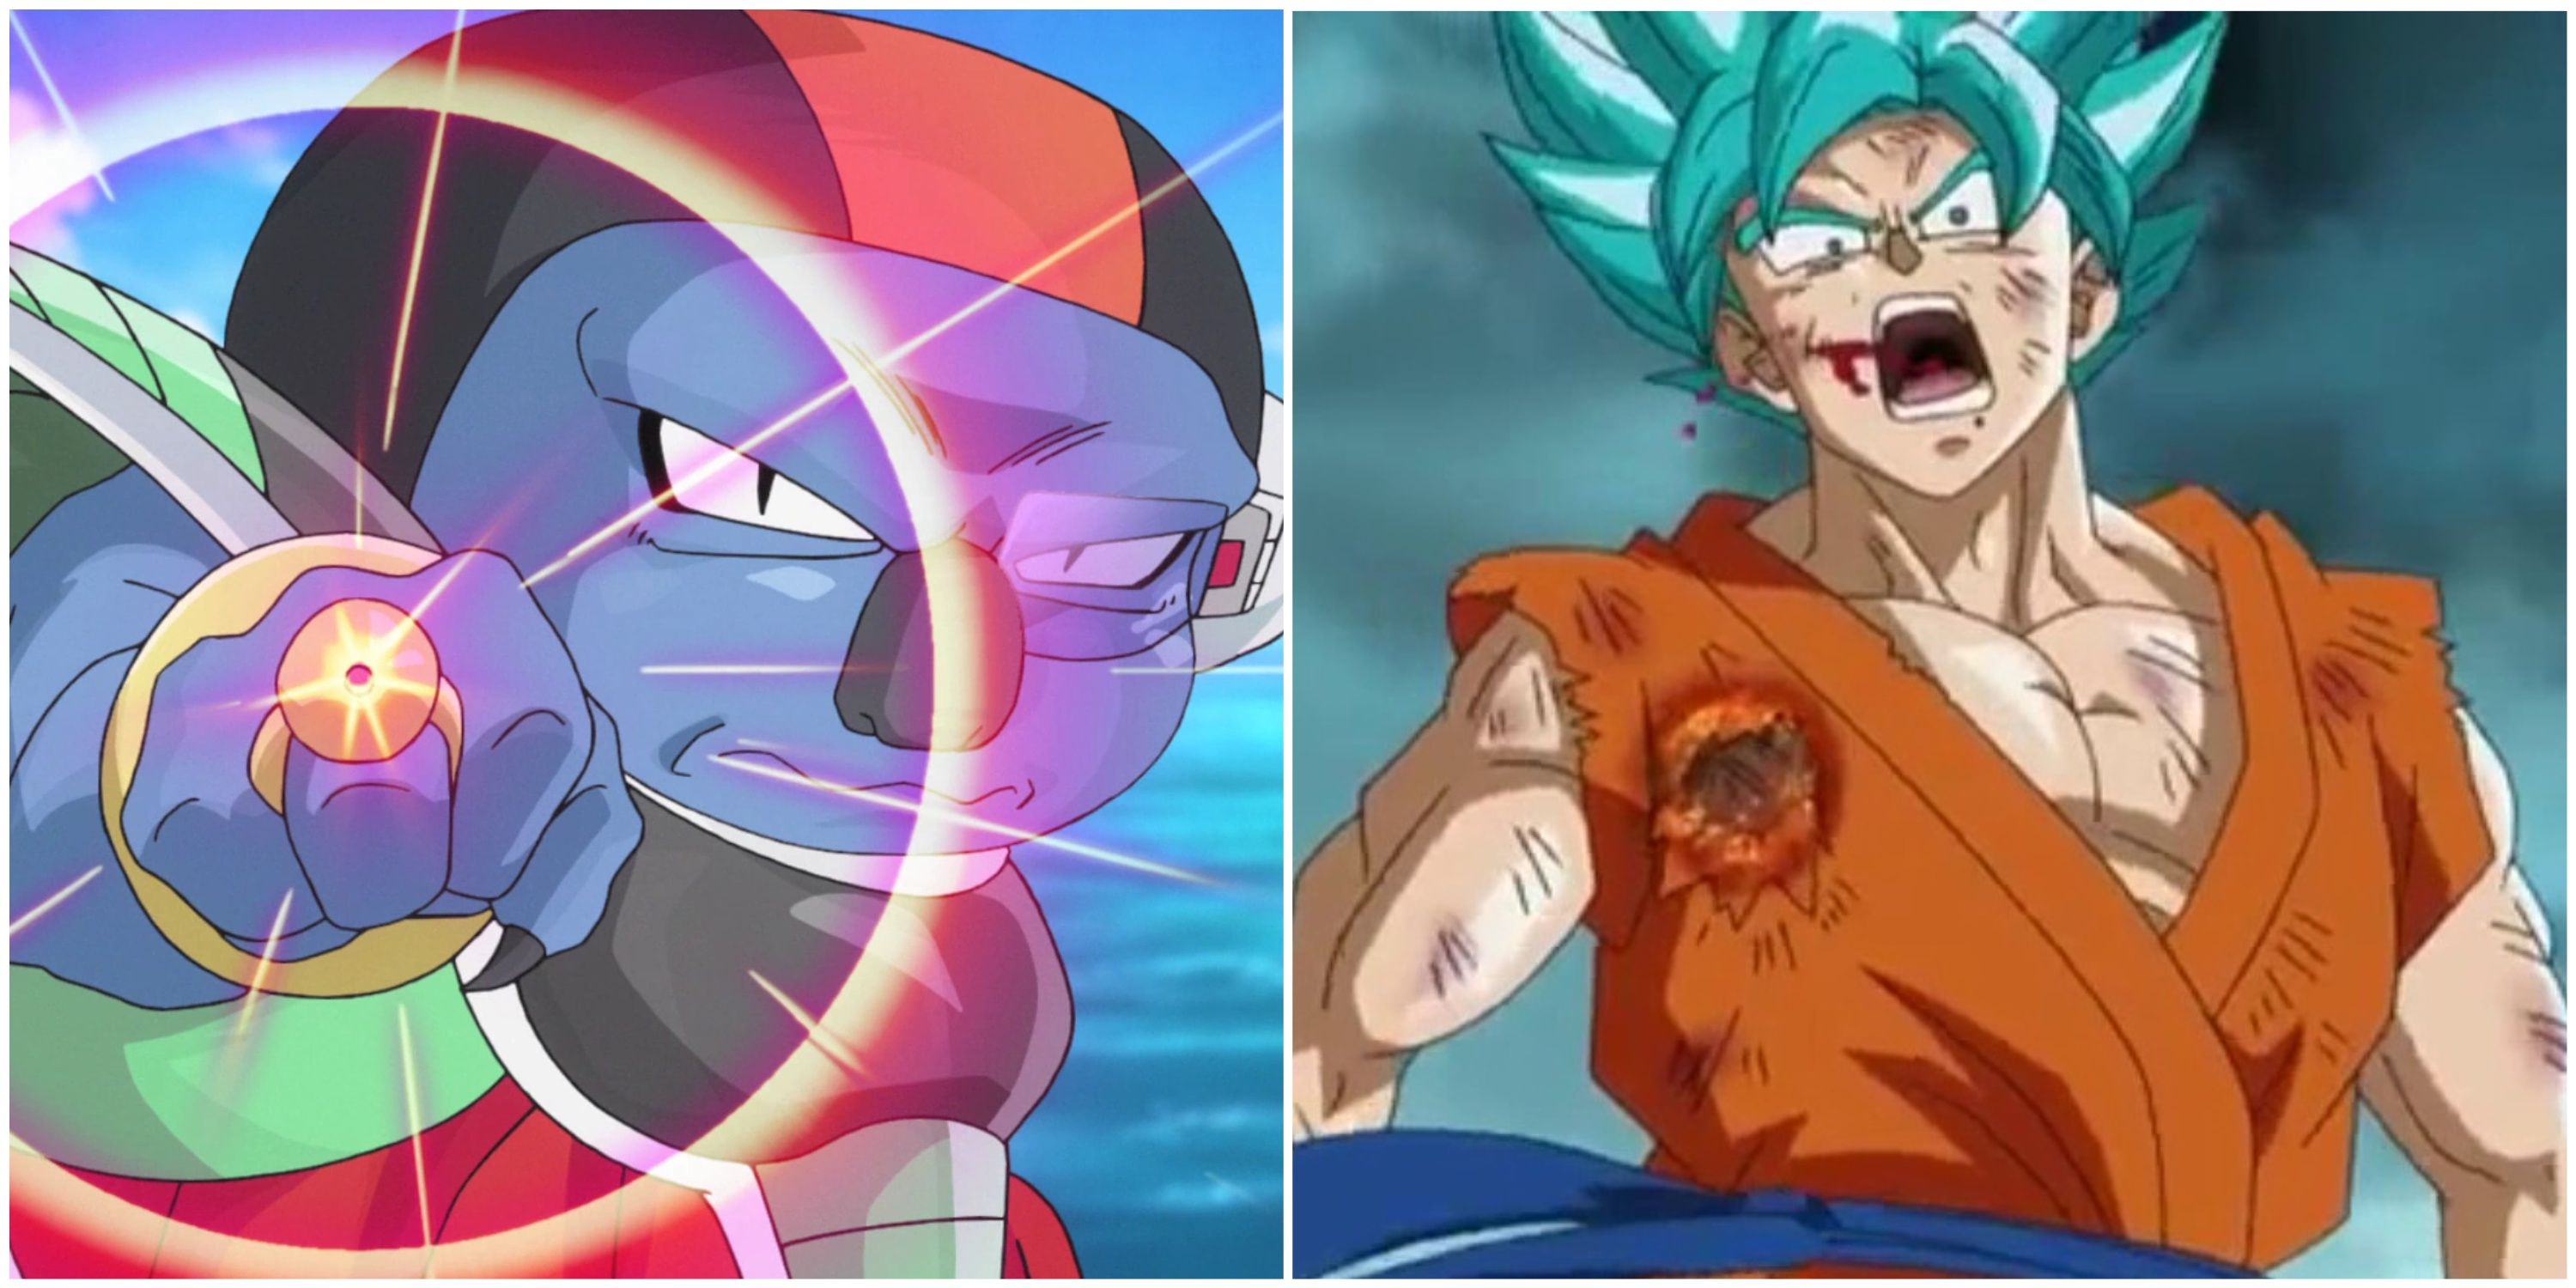 Sorbet and Goku in Dragon Ball Super